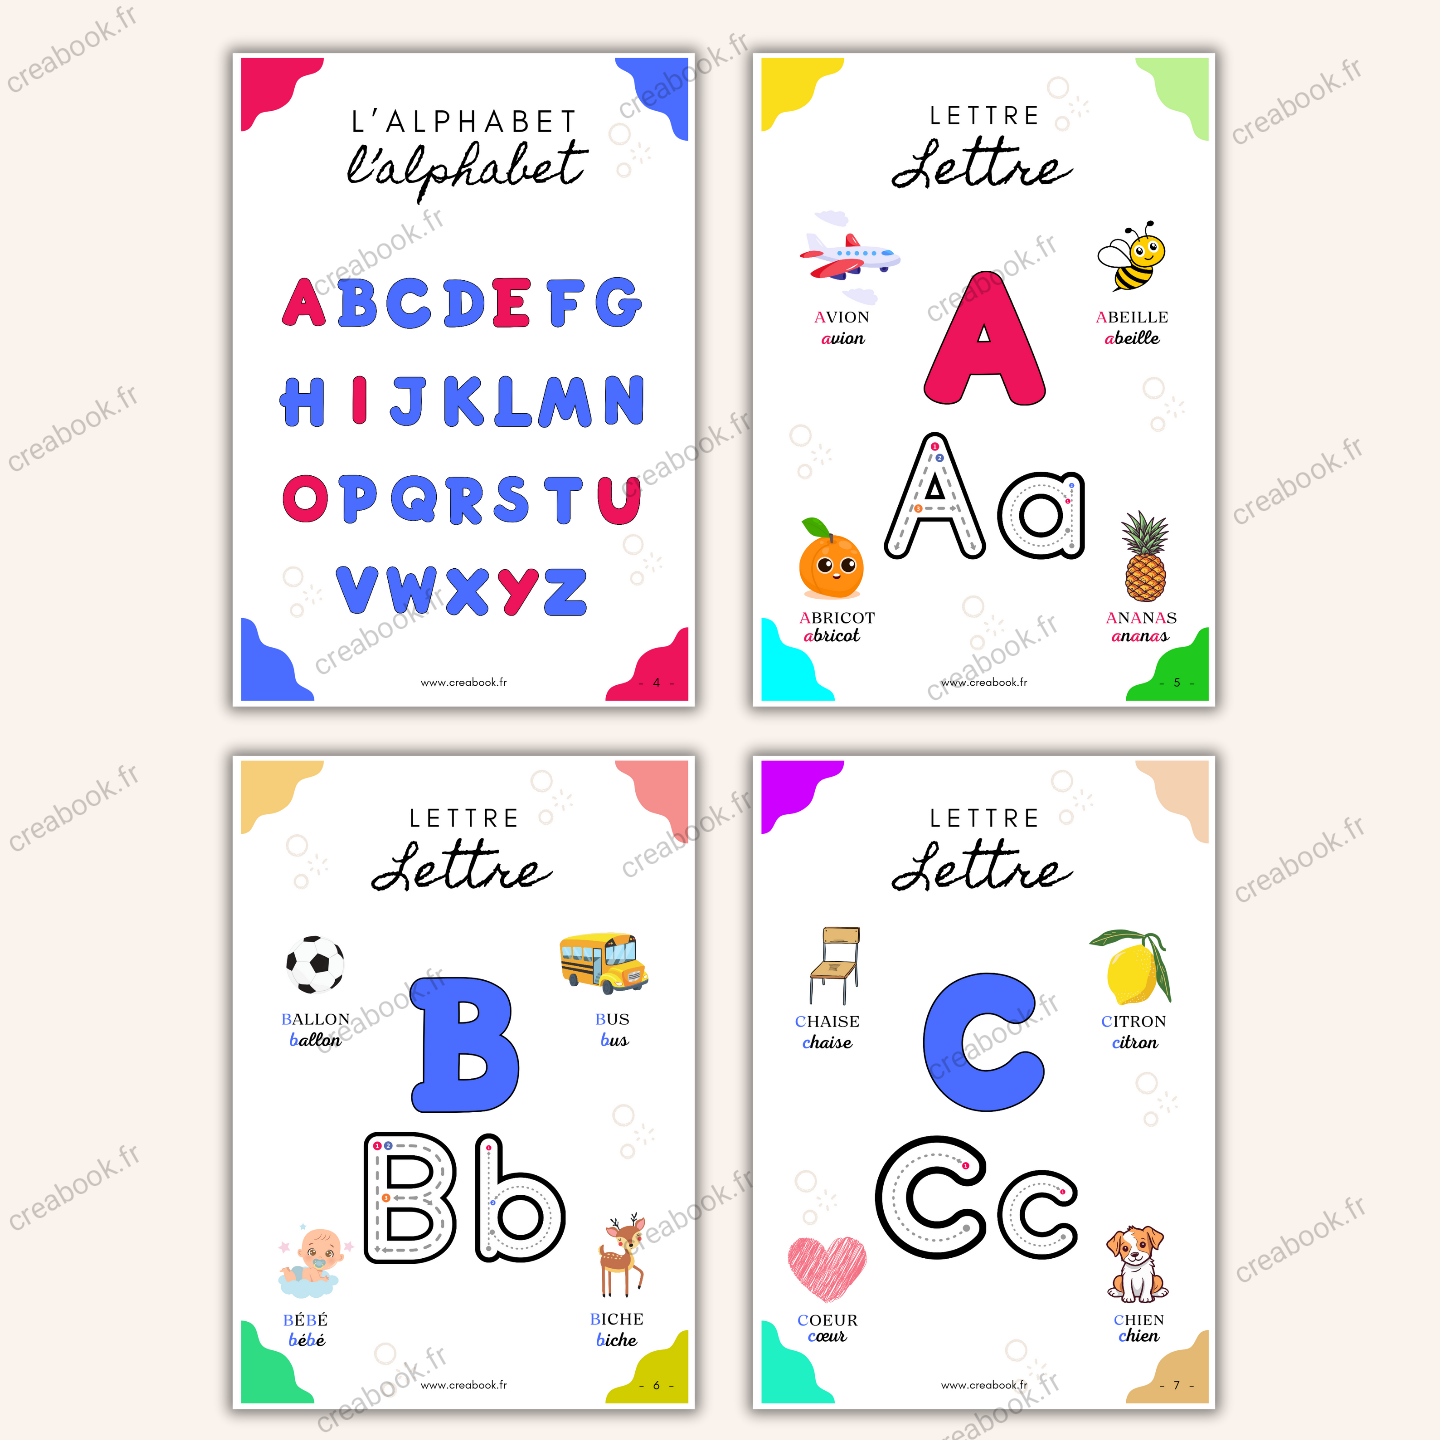 L'alphabet PDF